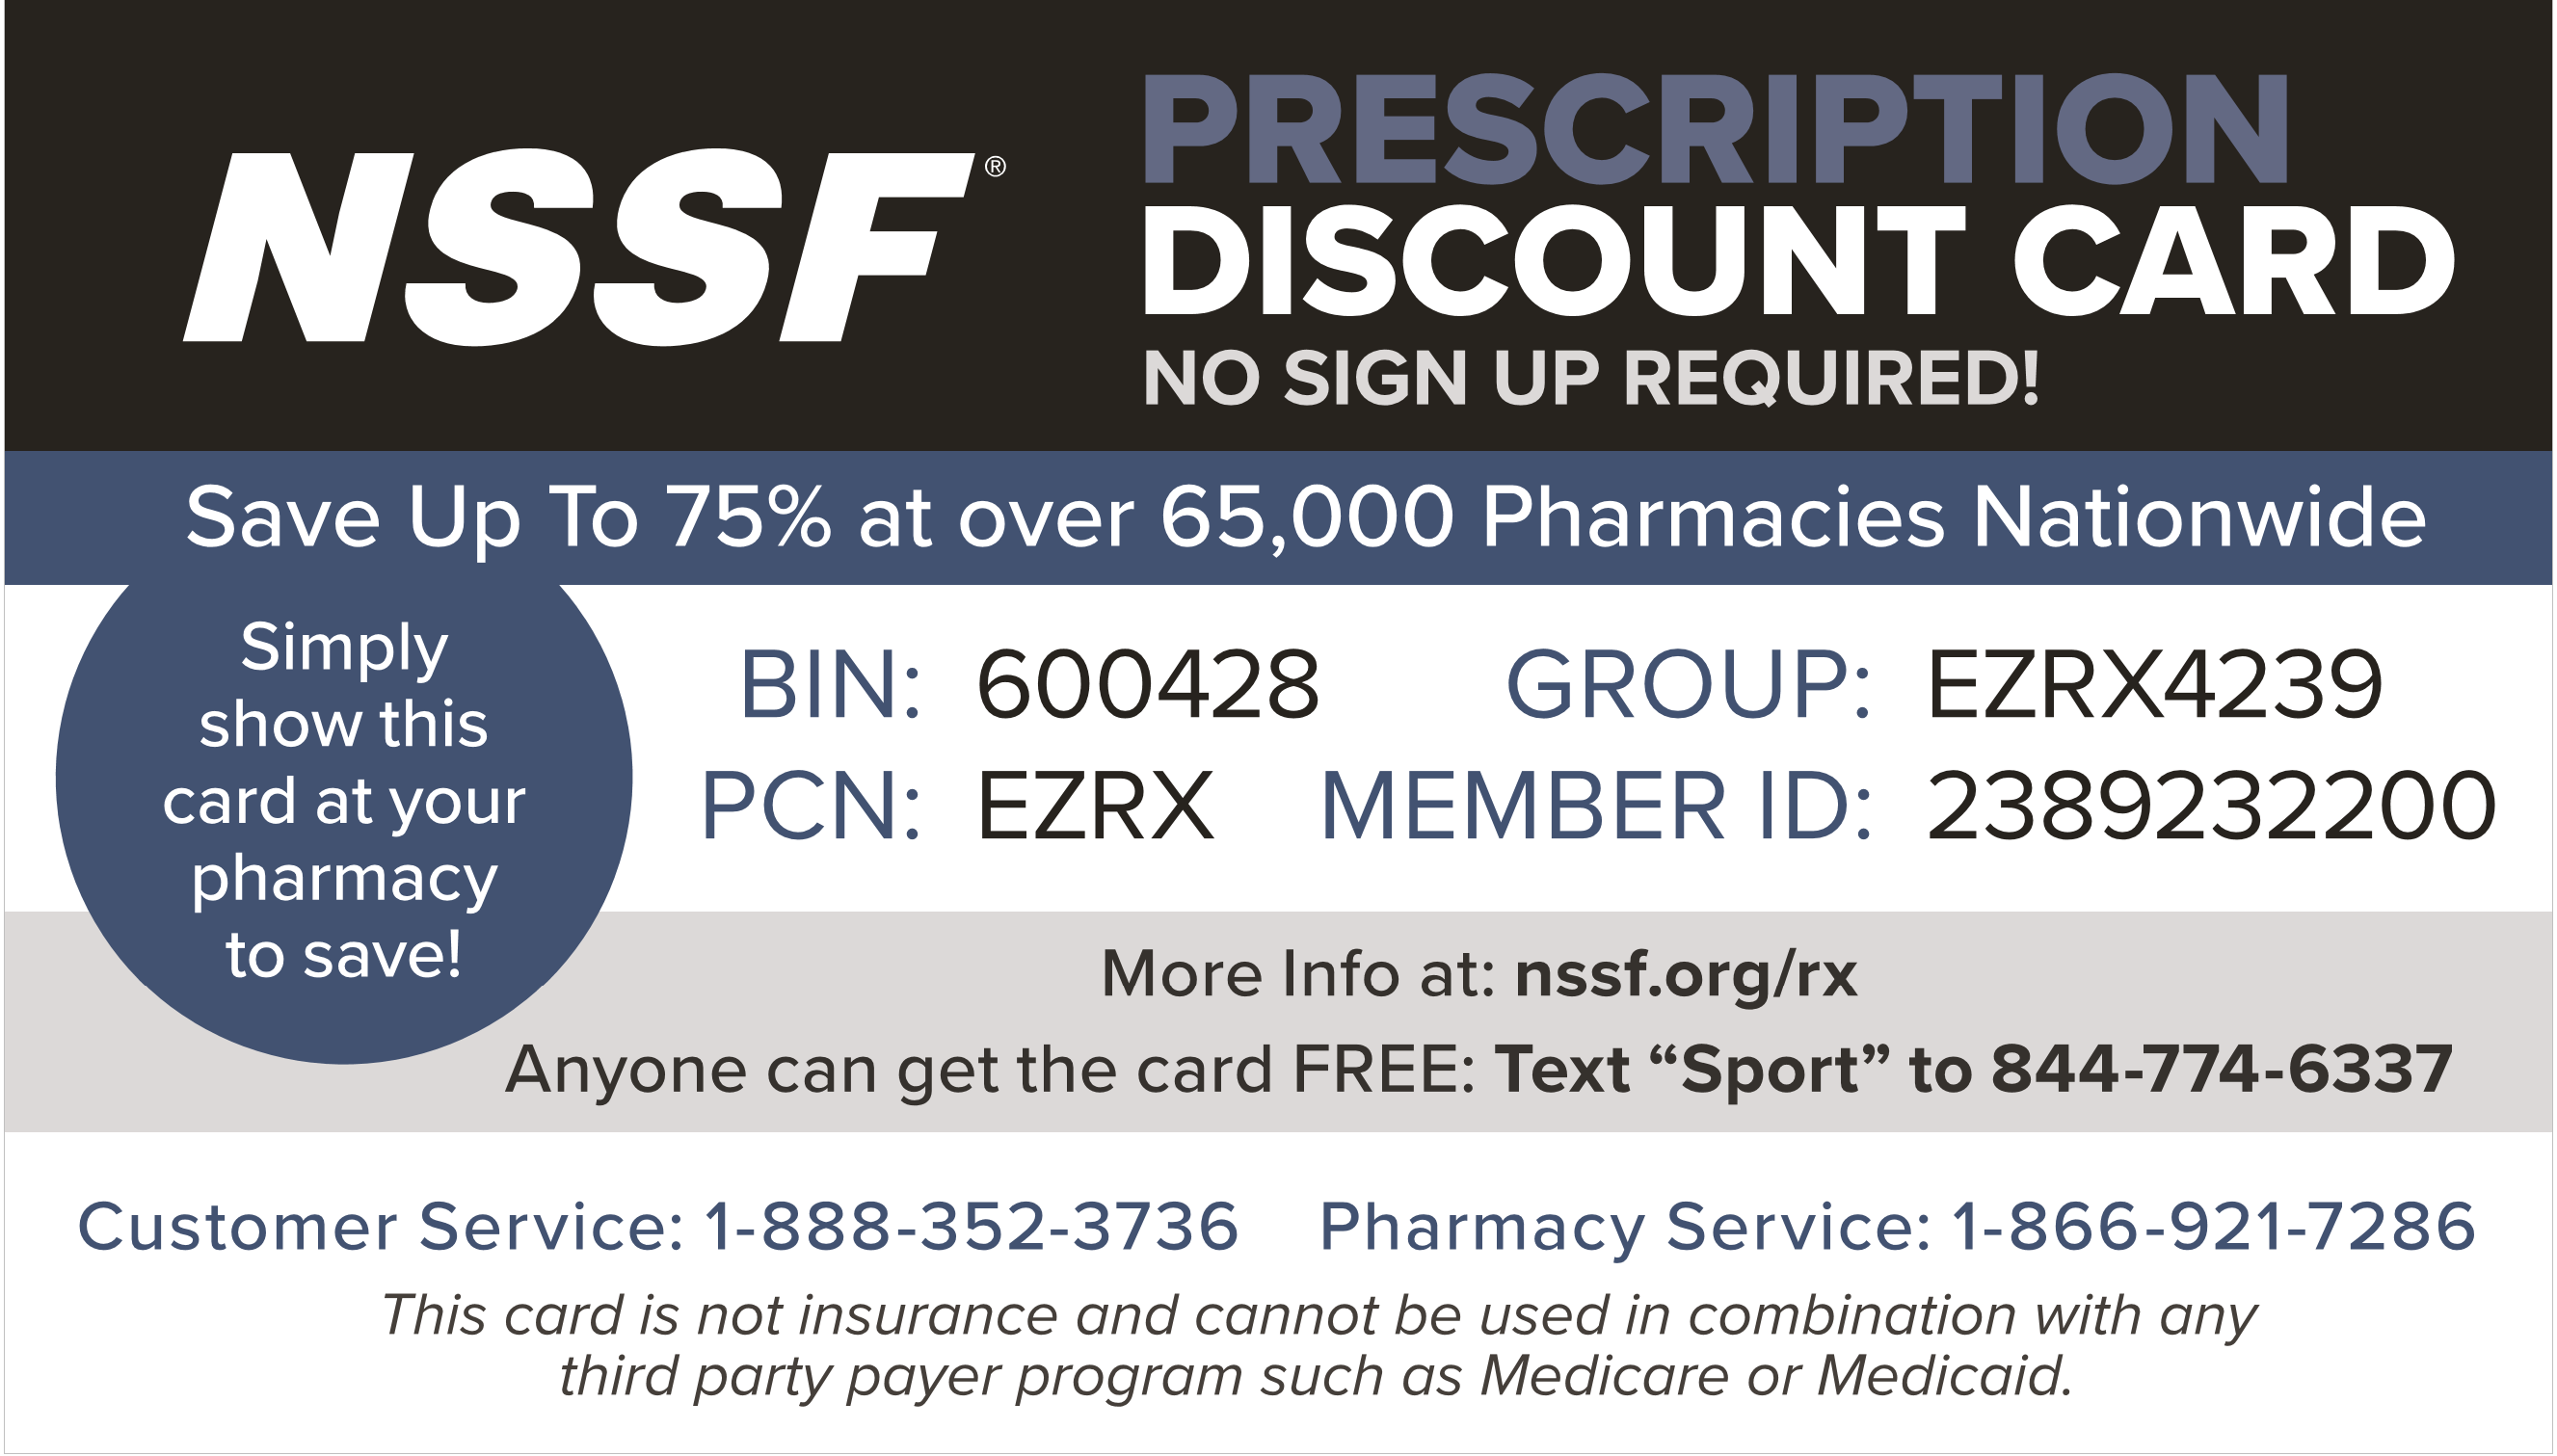 NSSF Prescription Discount Card.png